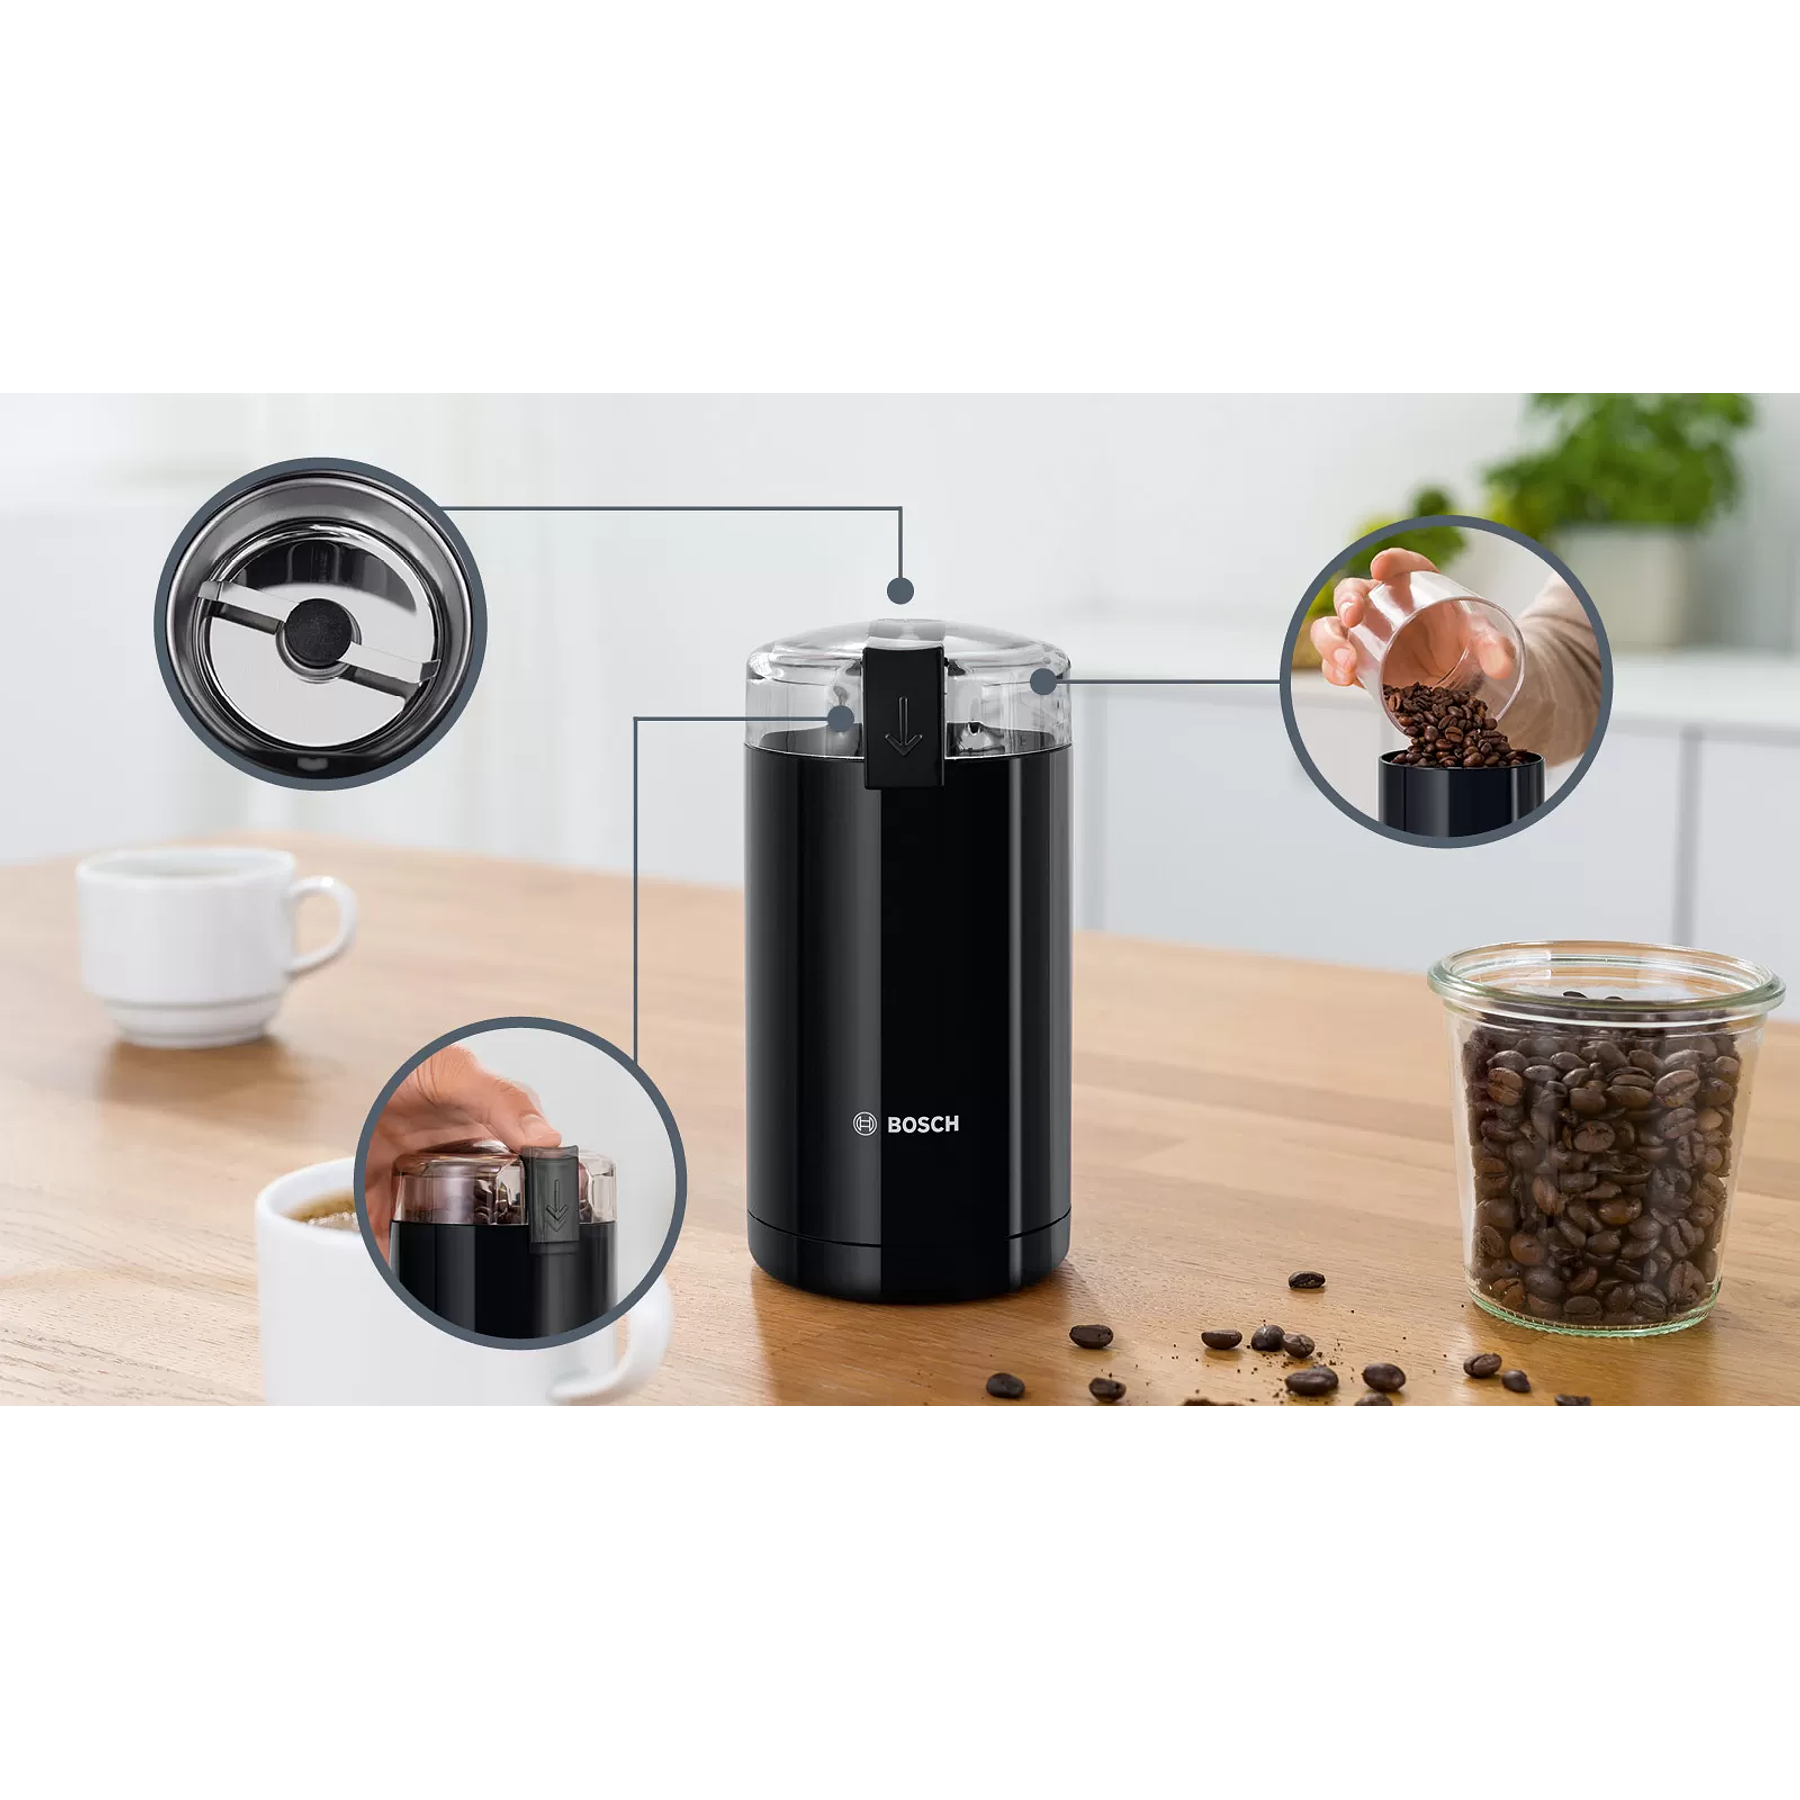 Molinillo de cafe electrico Bosch Negro — Amo cocinar